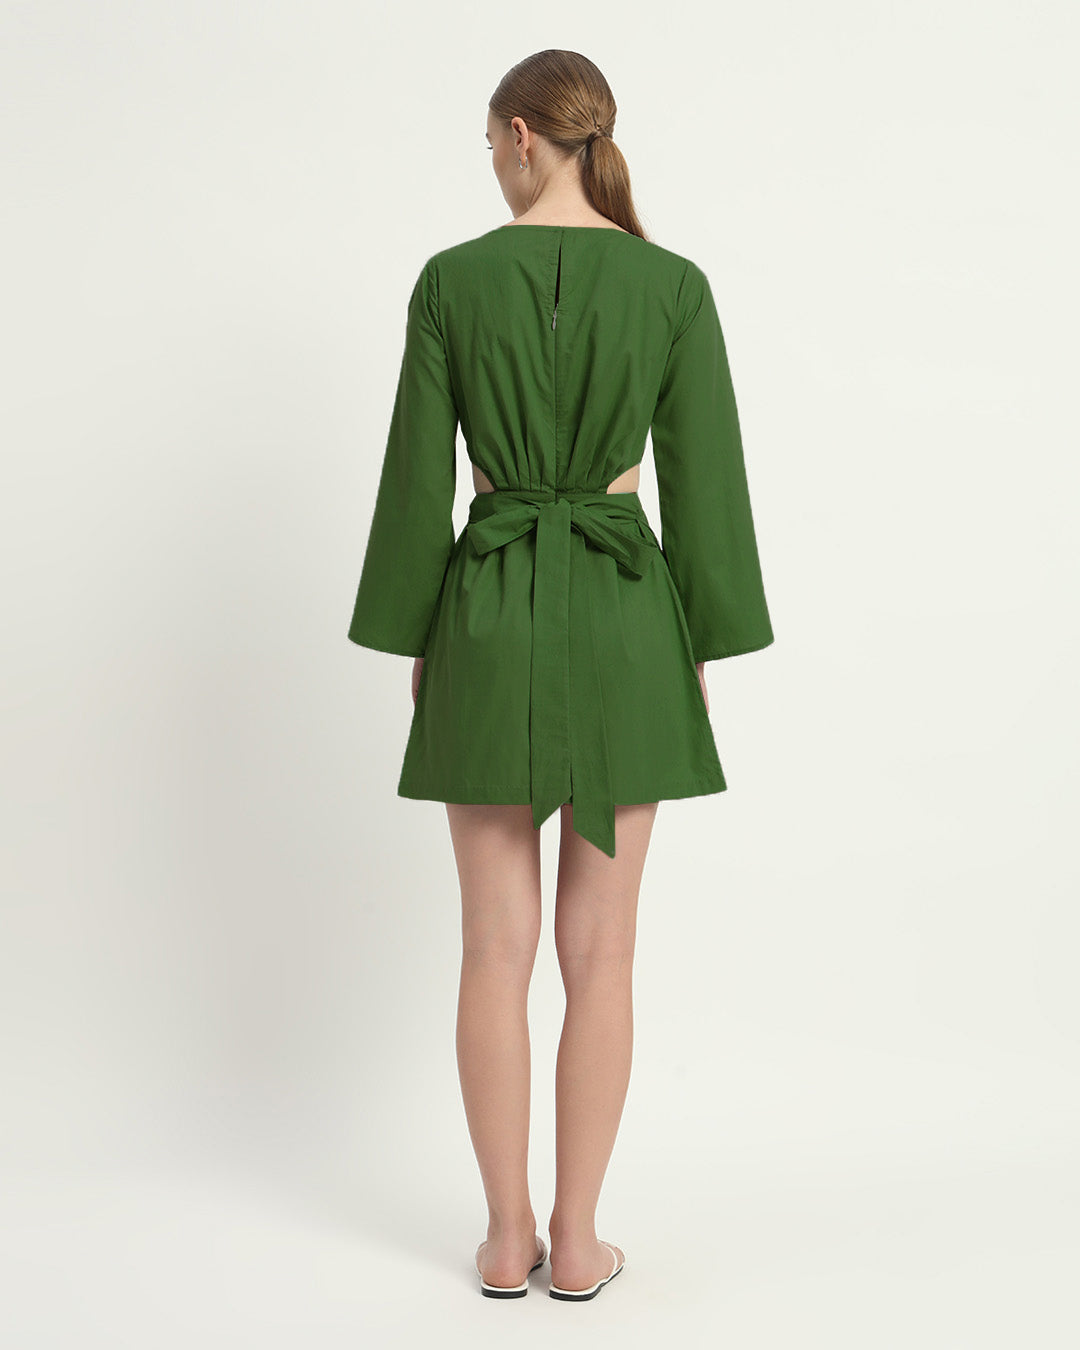 The Emerald Eloy Cotton Dress